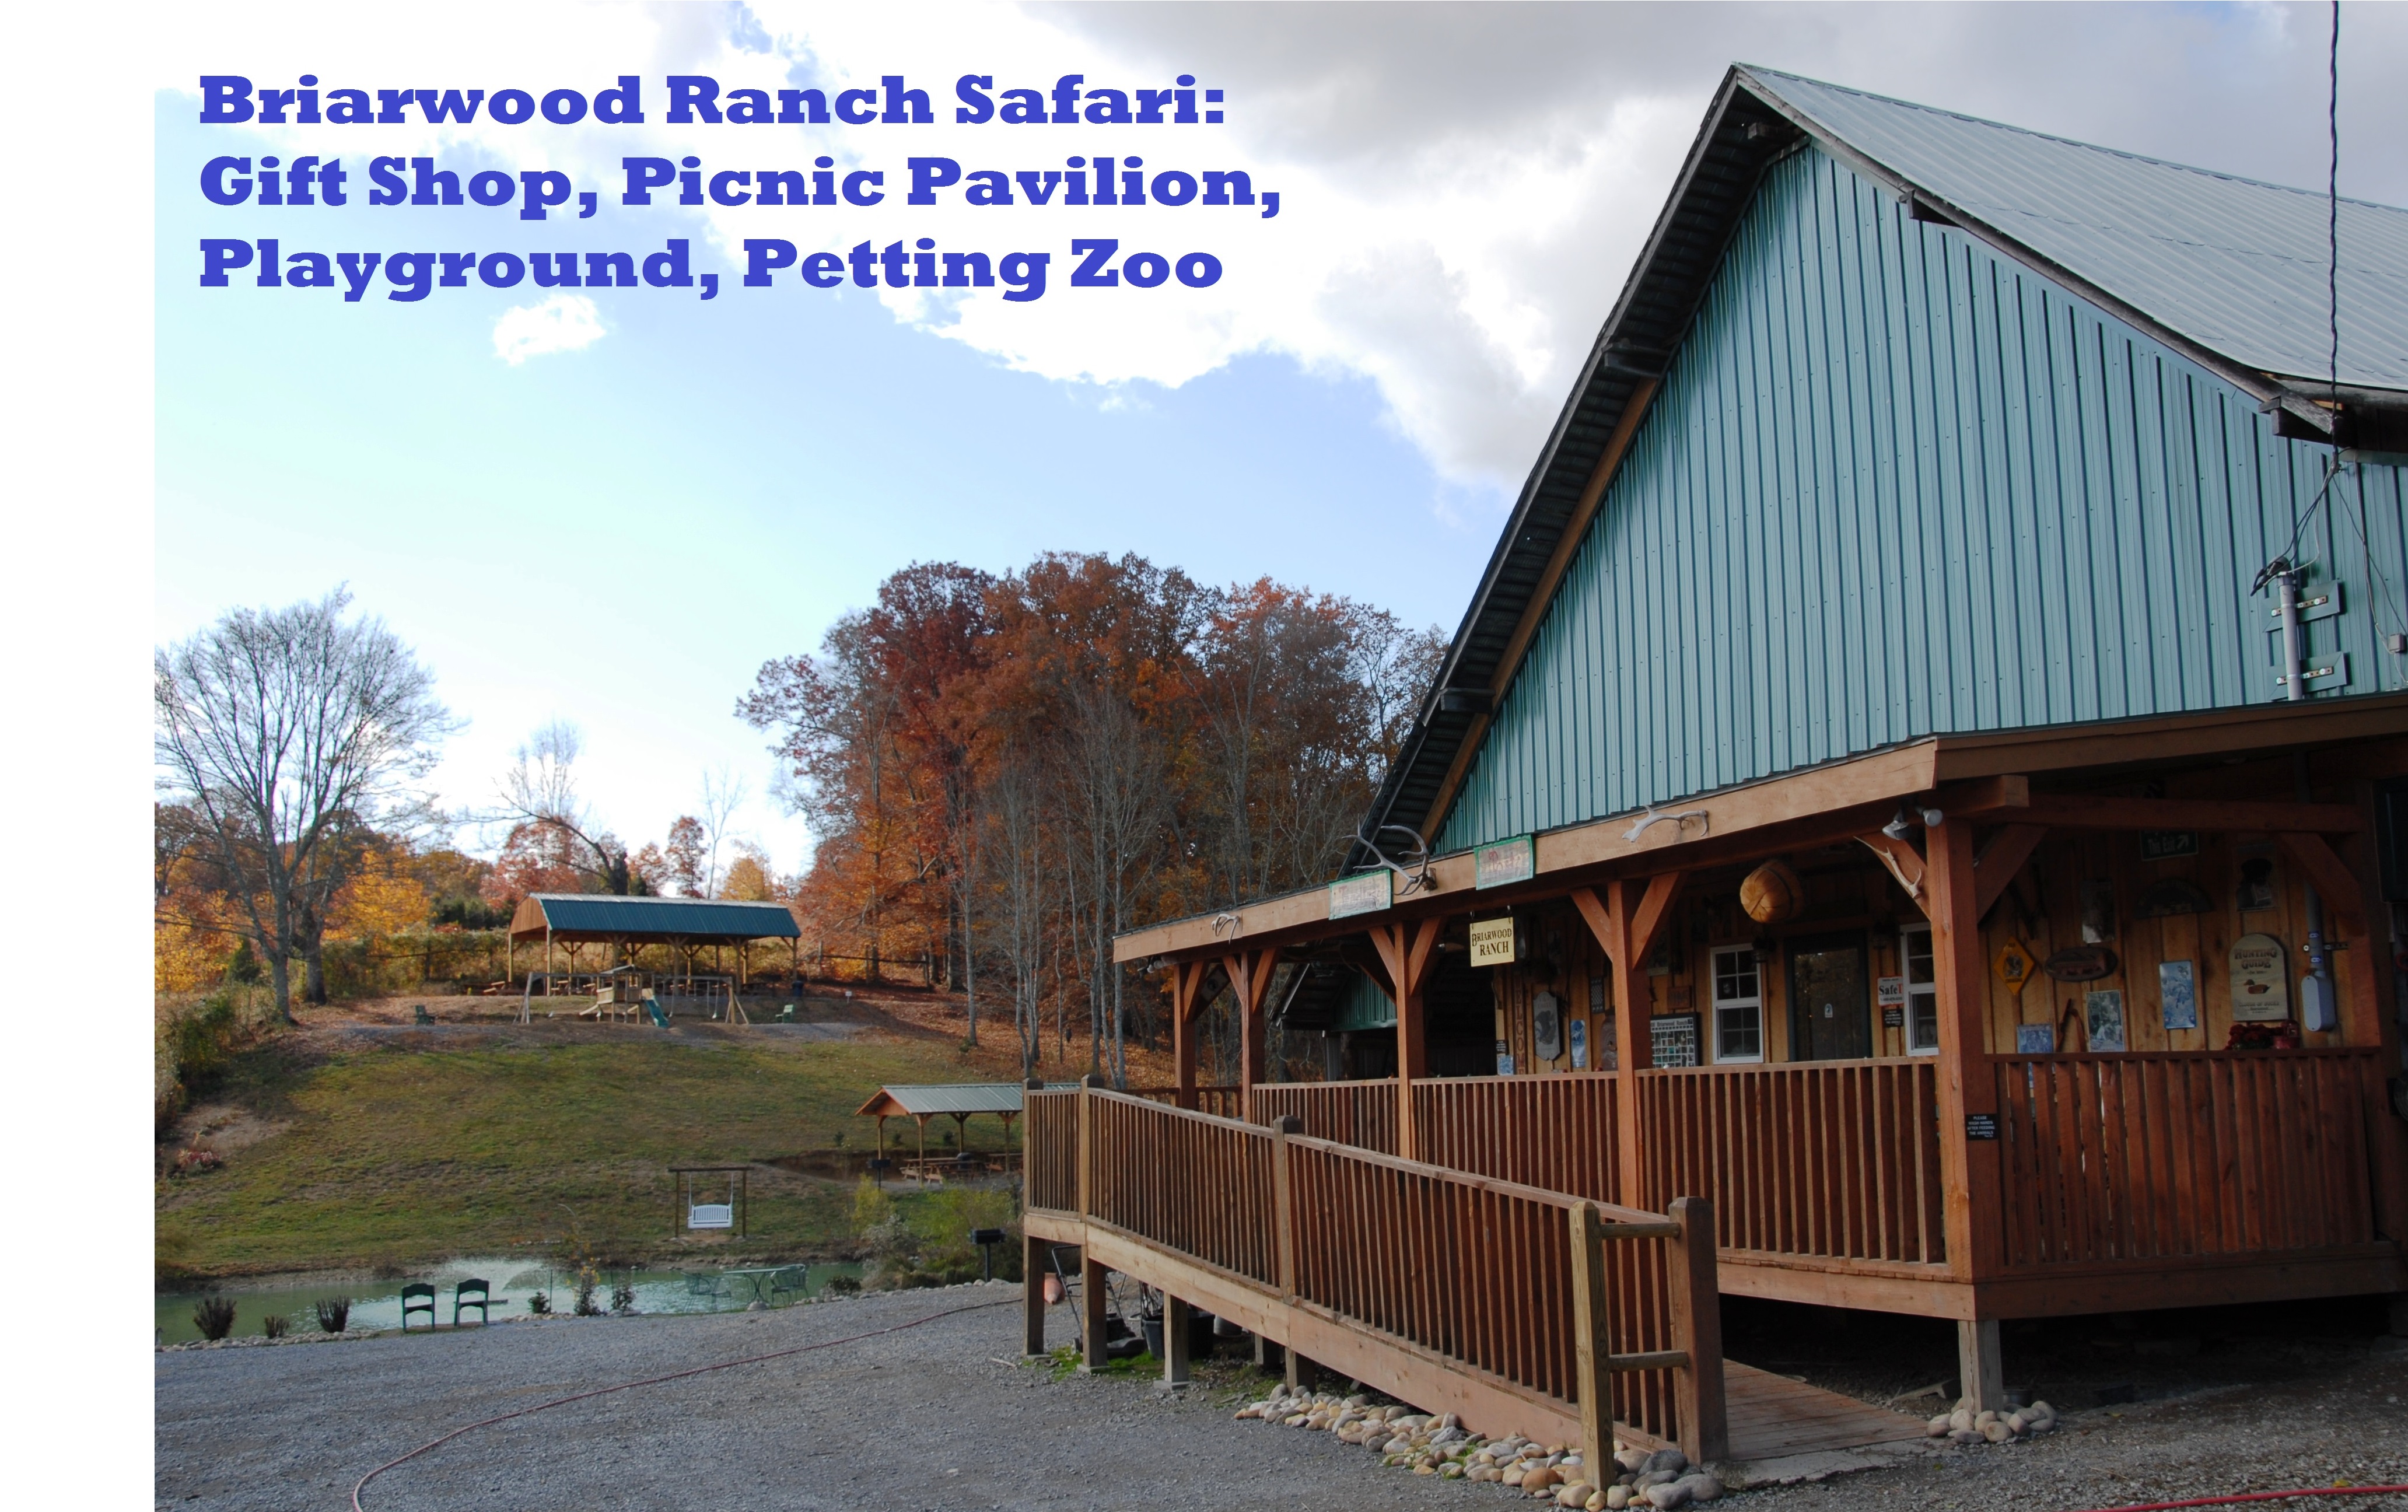 Briarwood-Ranch-Safari-26-w-text.jpg